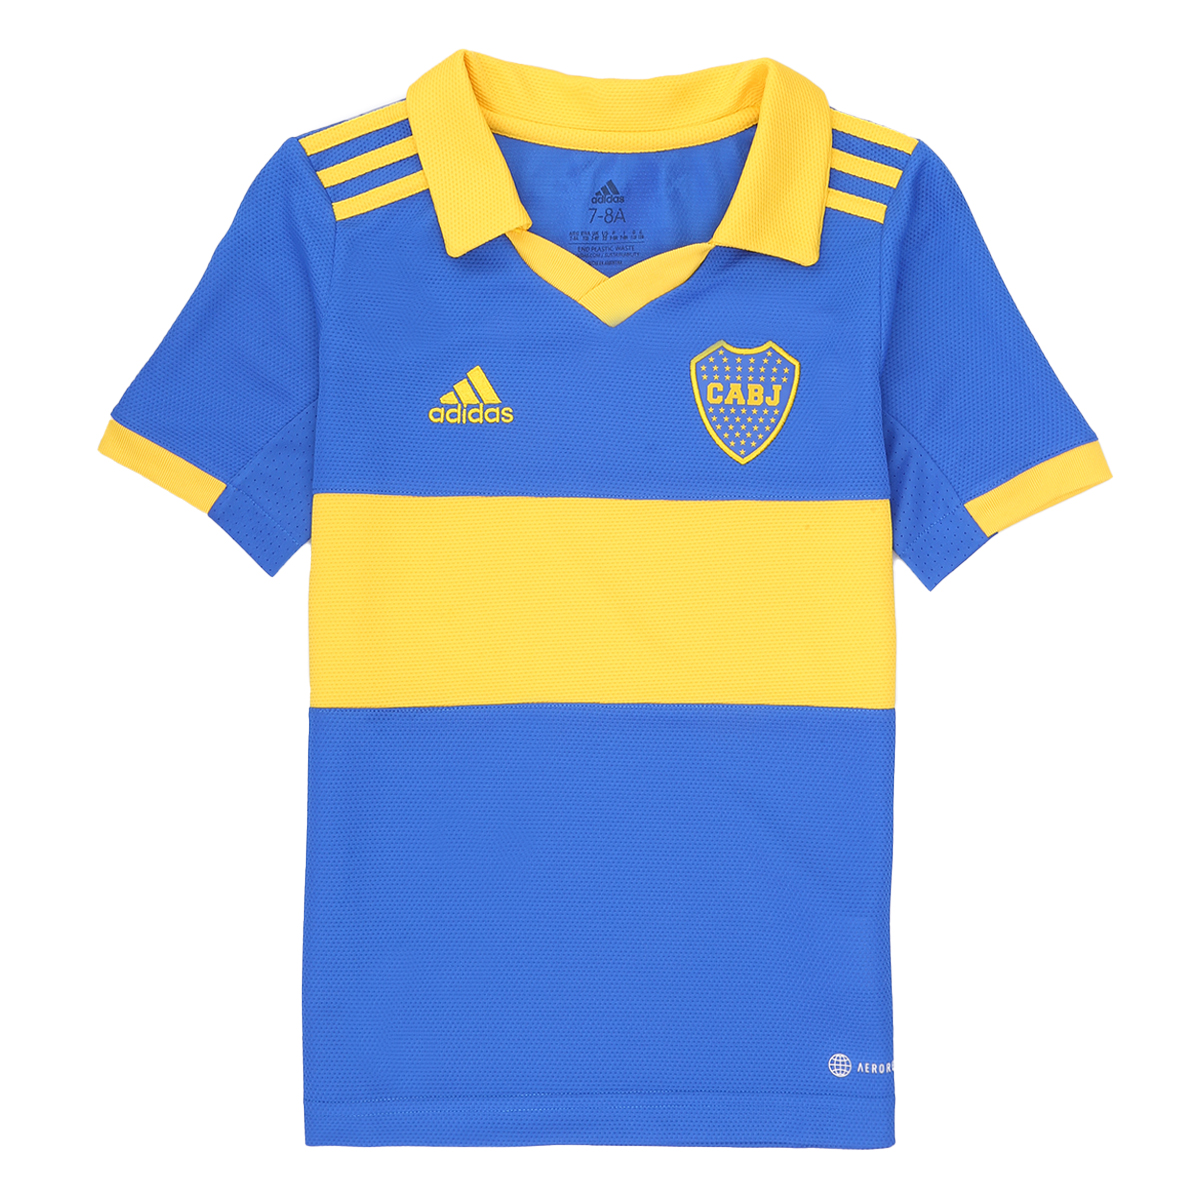 himno Nacional Humano recluta Camiseta adidas Boca Juniors | Dexter